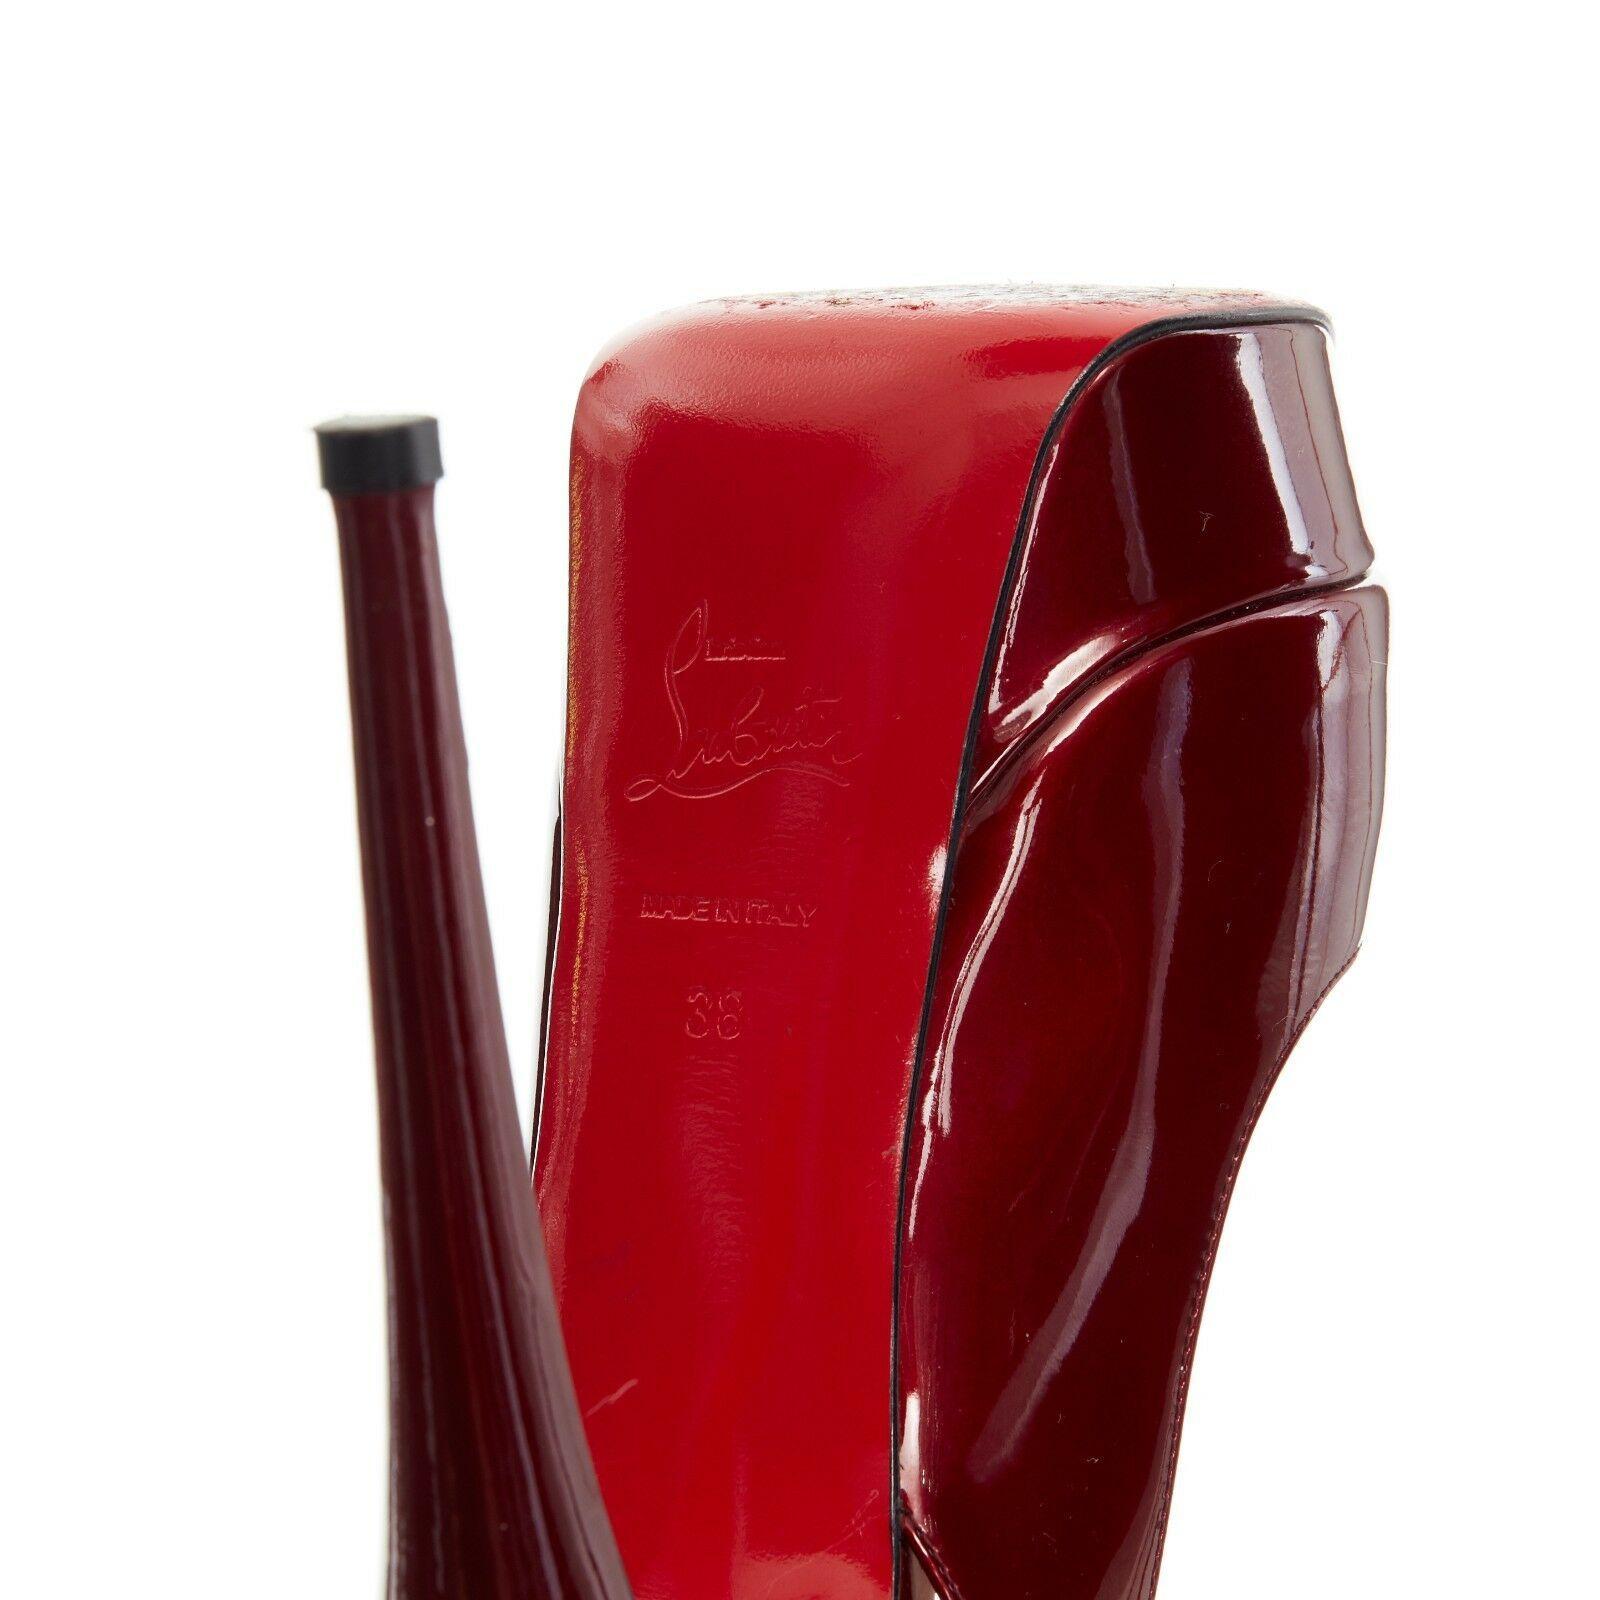 CHRISTIAN LOUBOUTIN Lady Peep Sling 150 dark red patent platform heels EU38 US8 4